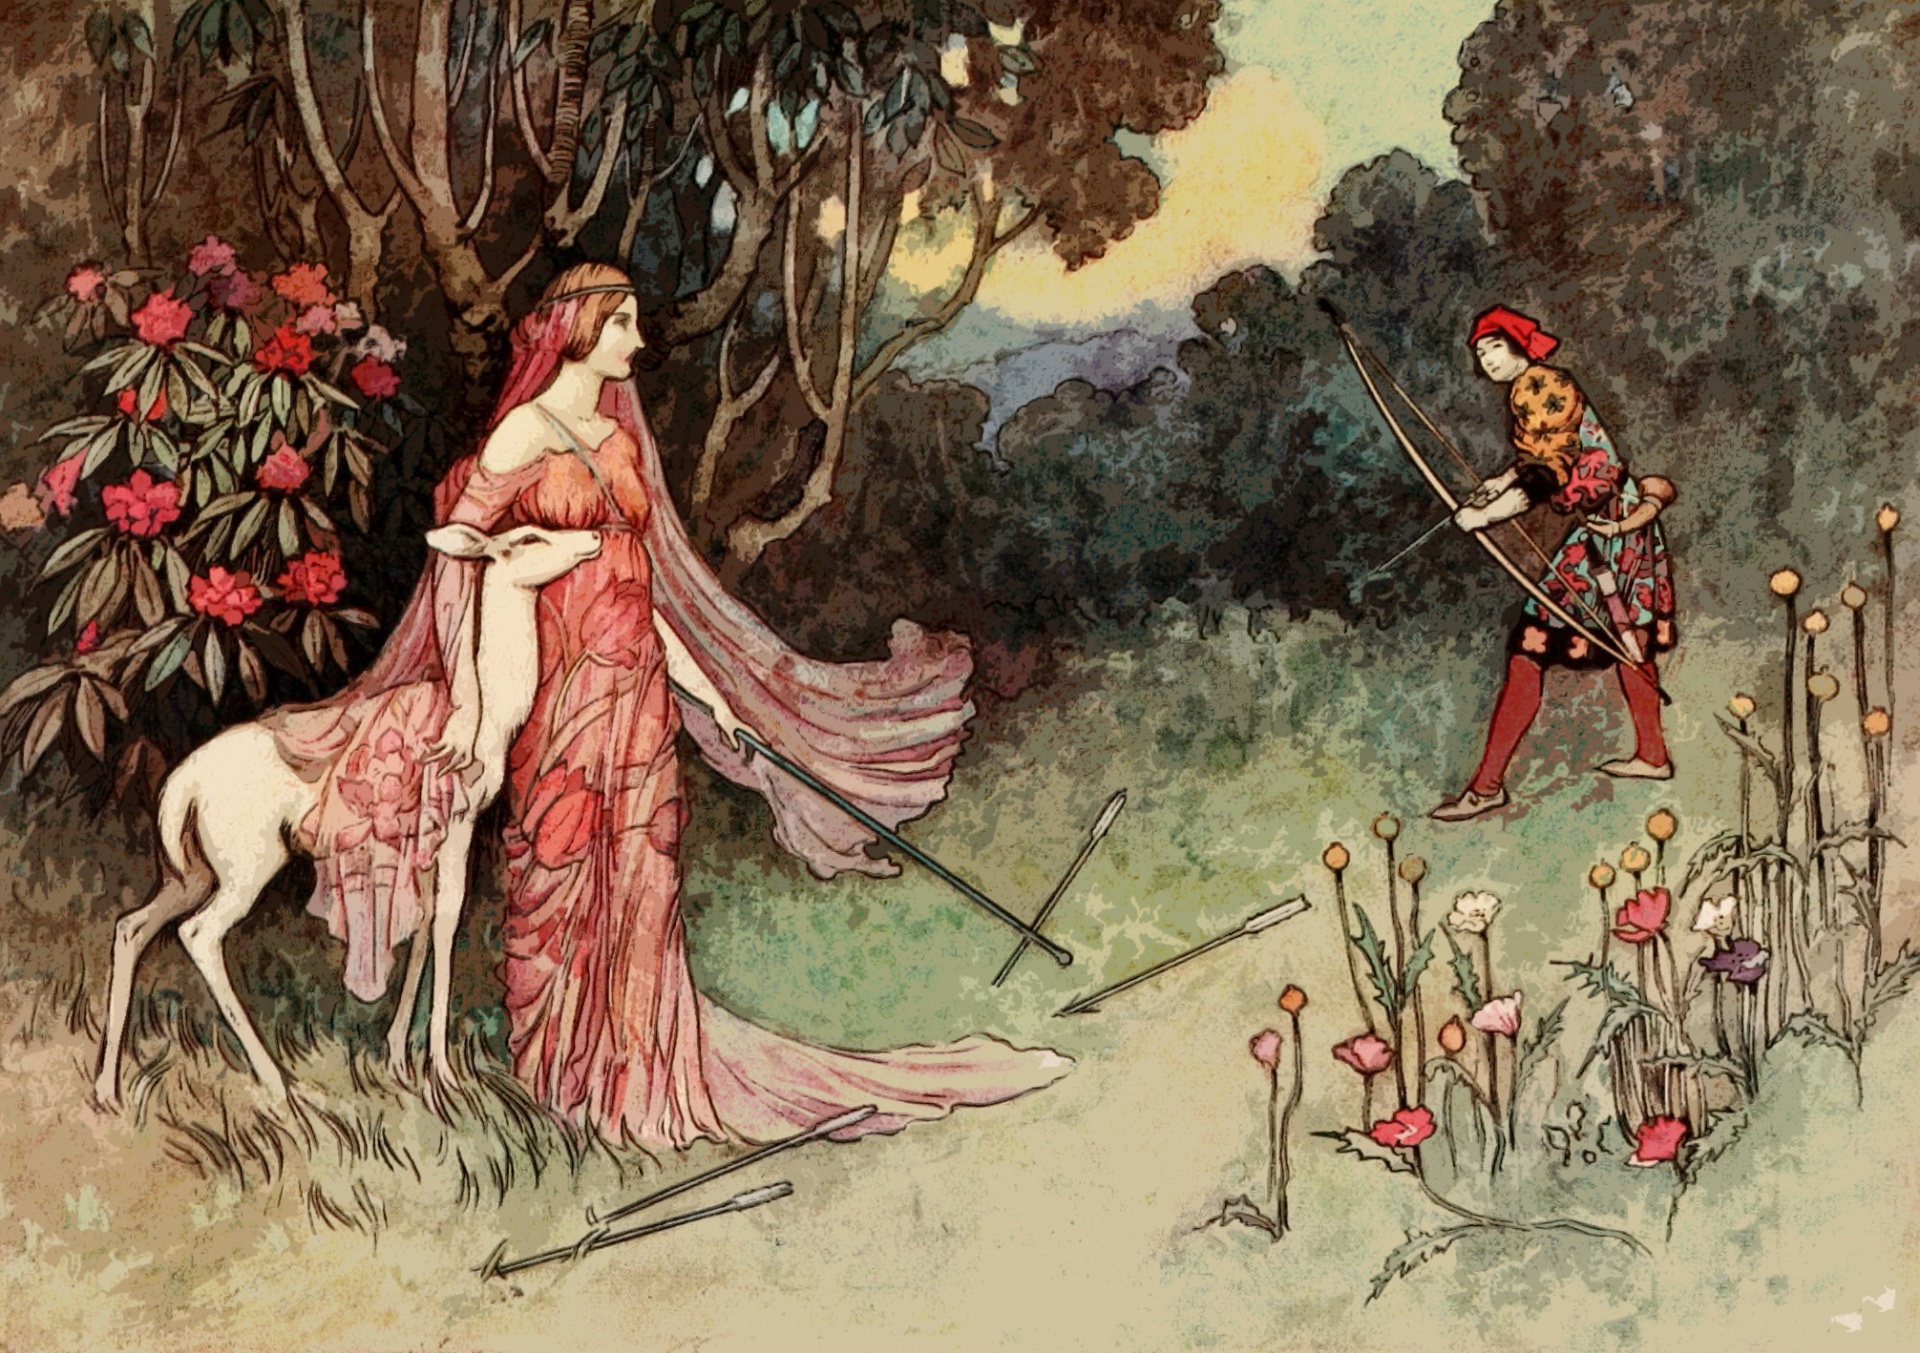 Enchanted Fairy Tale